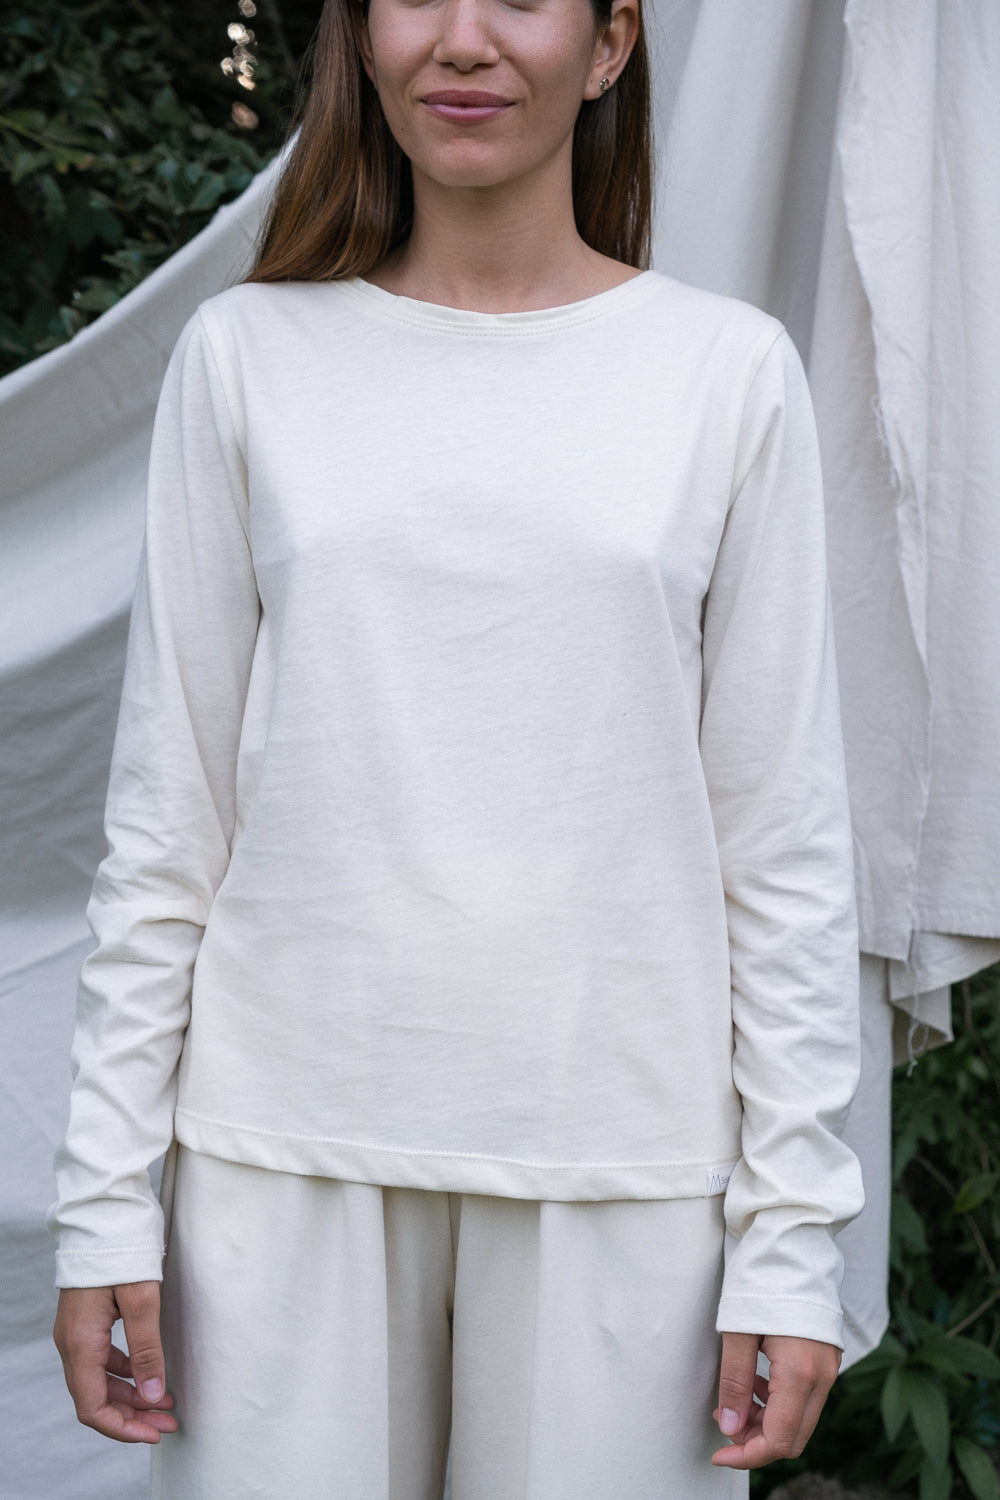 MIA Moda Regenerativa Camisetas M / natural Camiseta Esencial mujer manga larga - blanco y natural